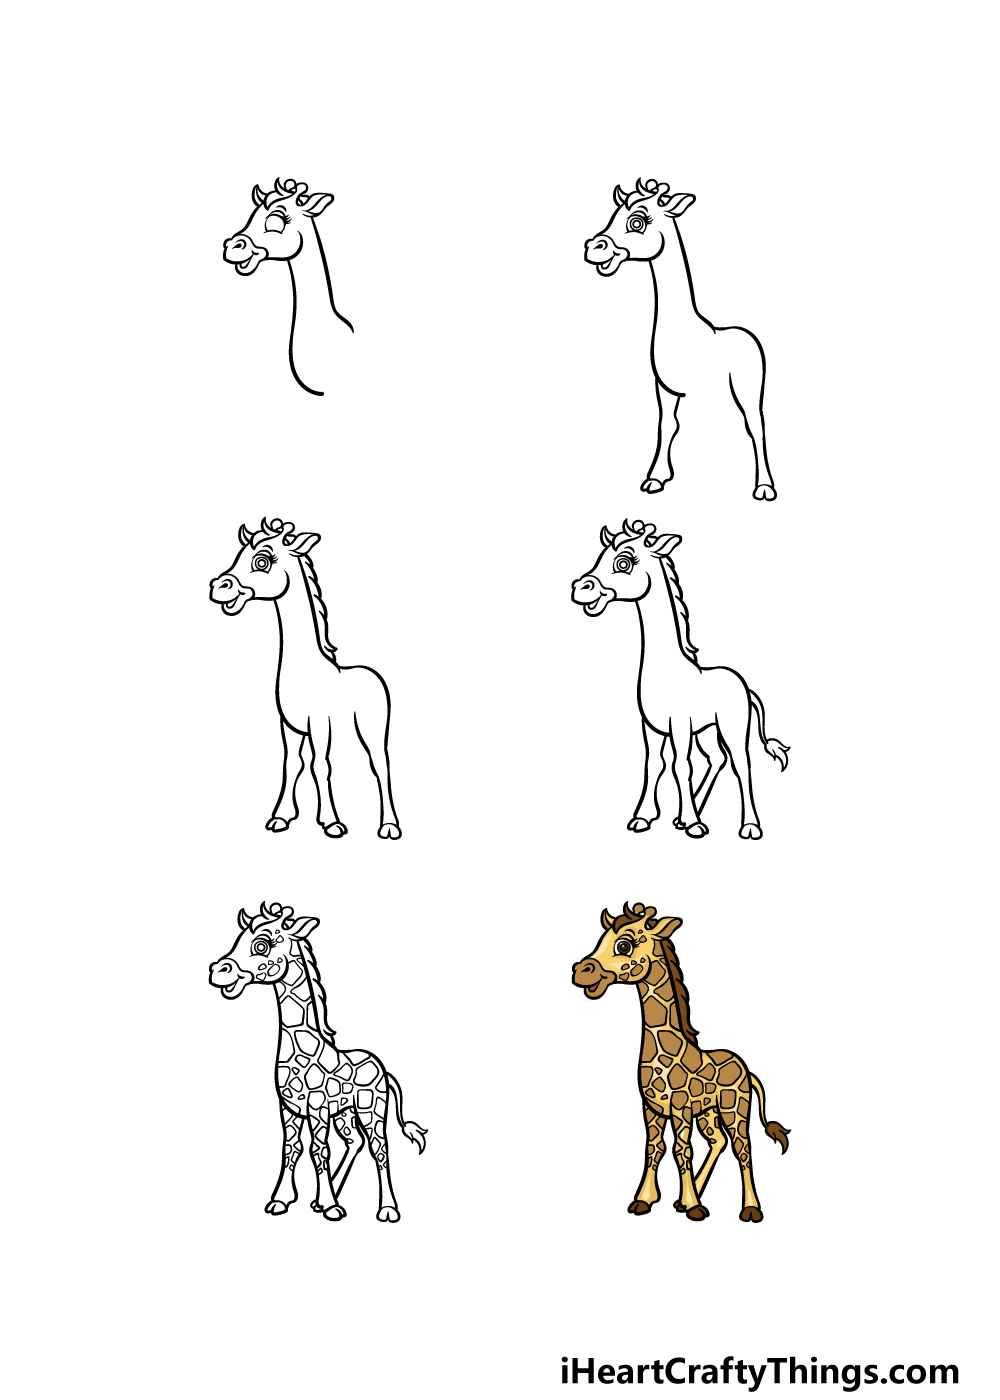 how to draw a cartoon giraffe in 6 steps